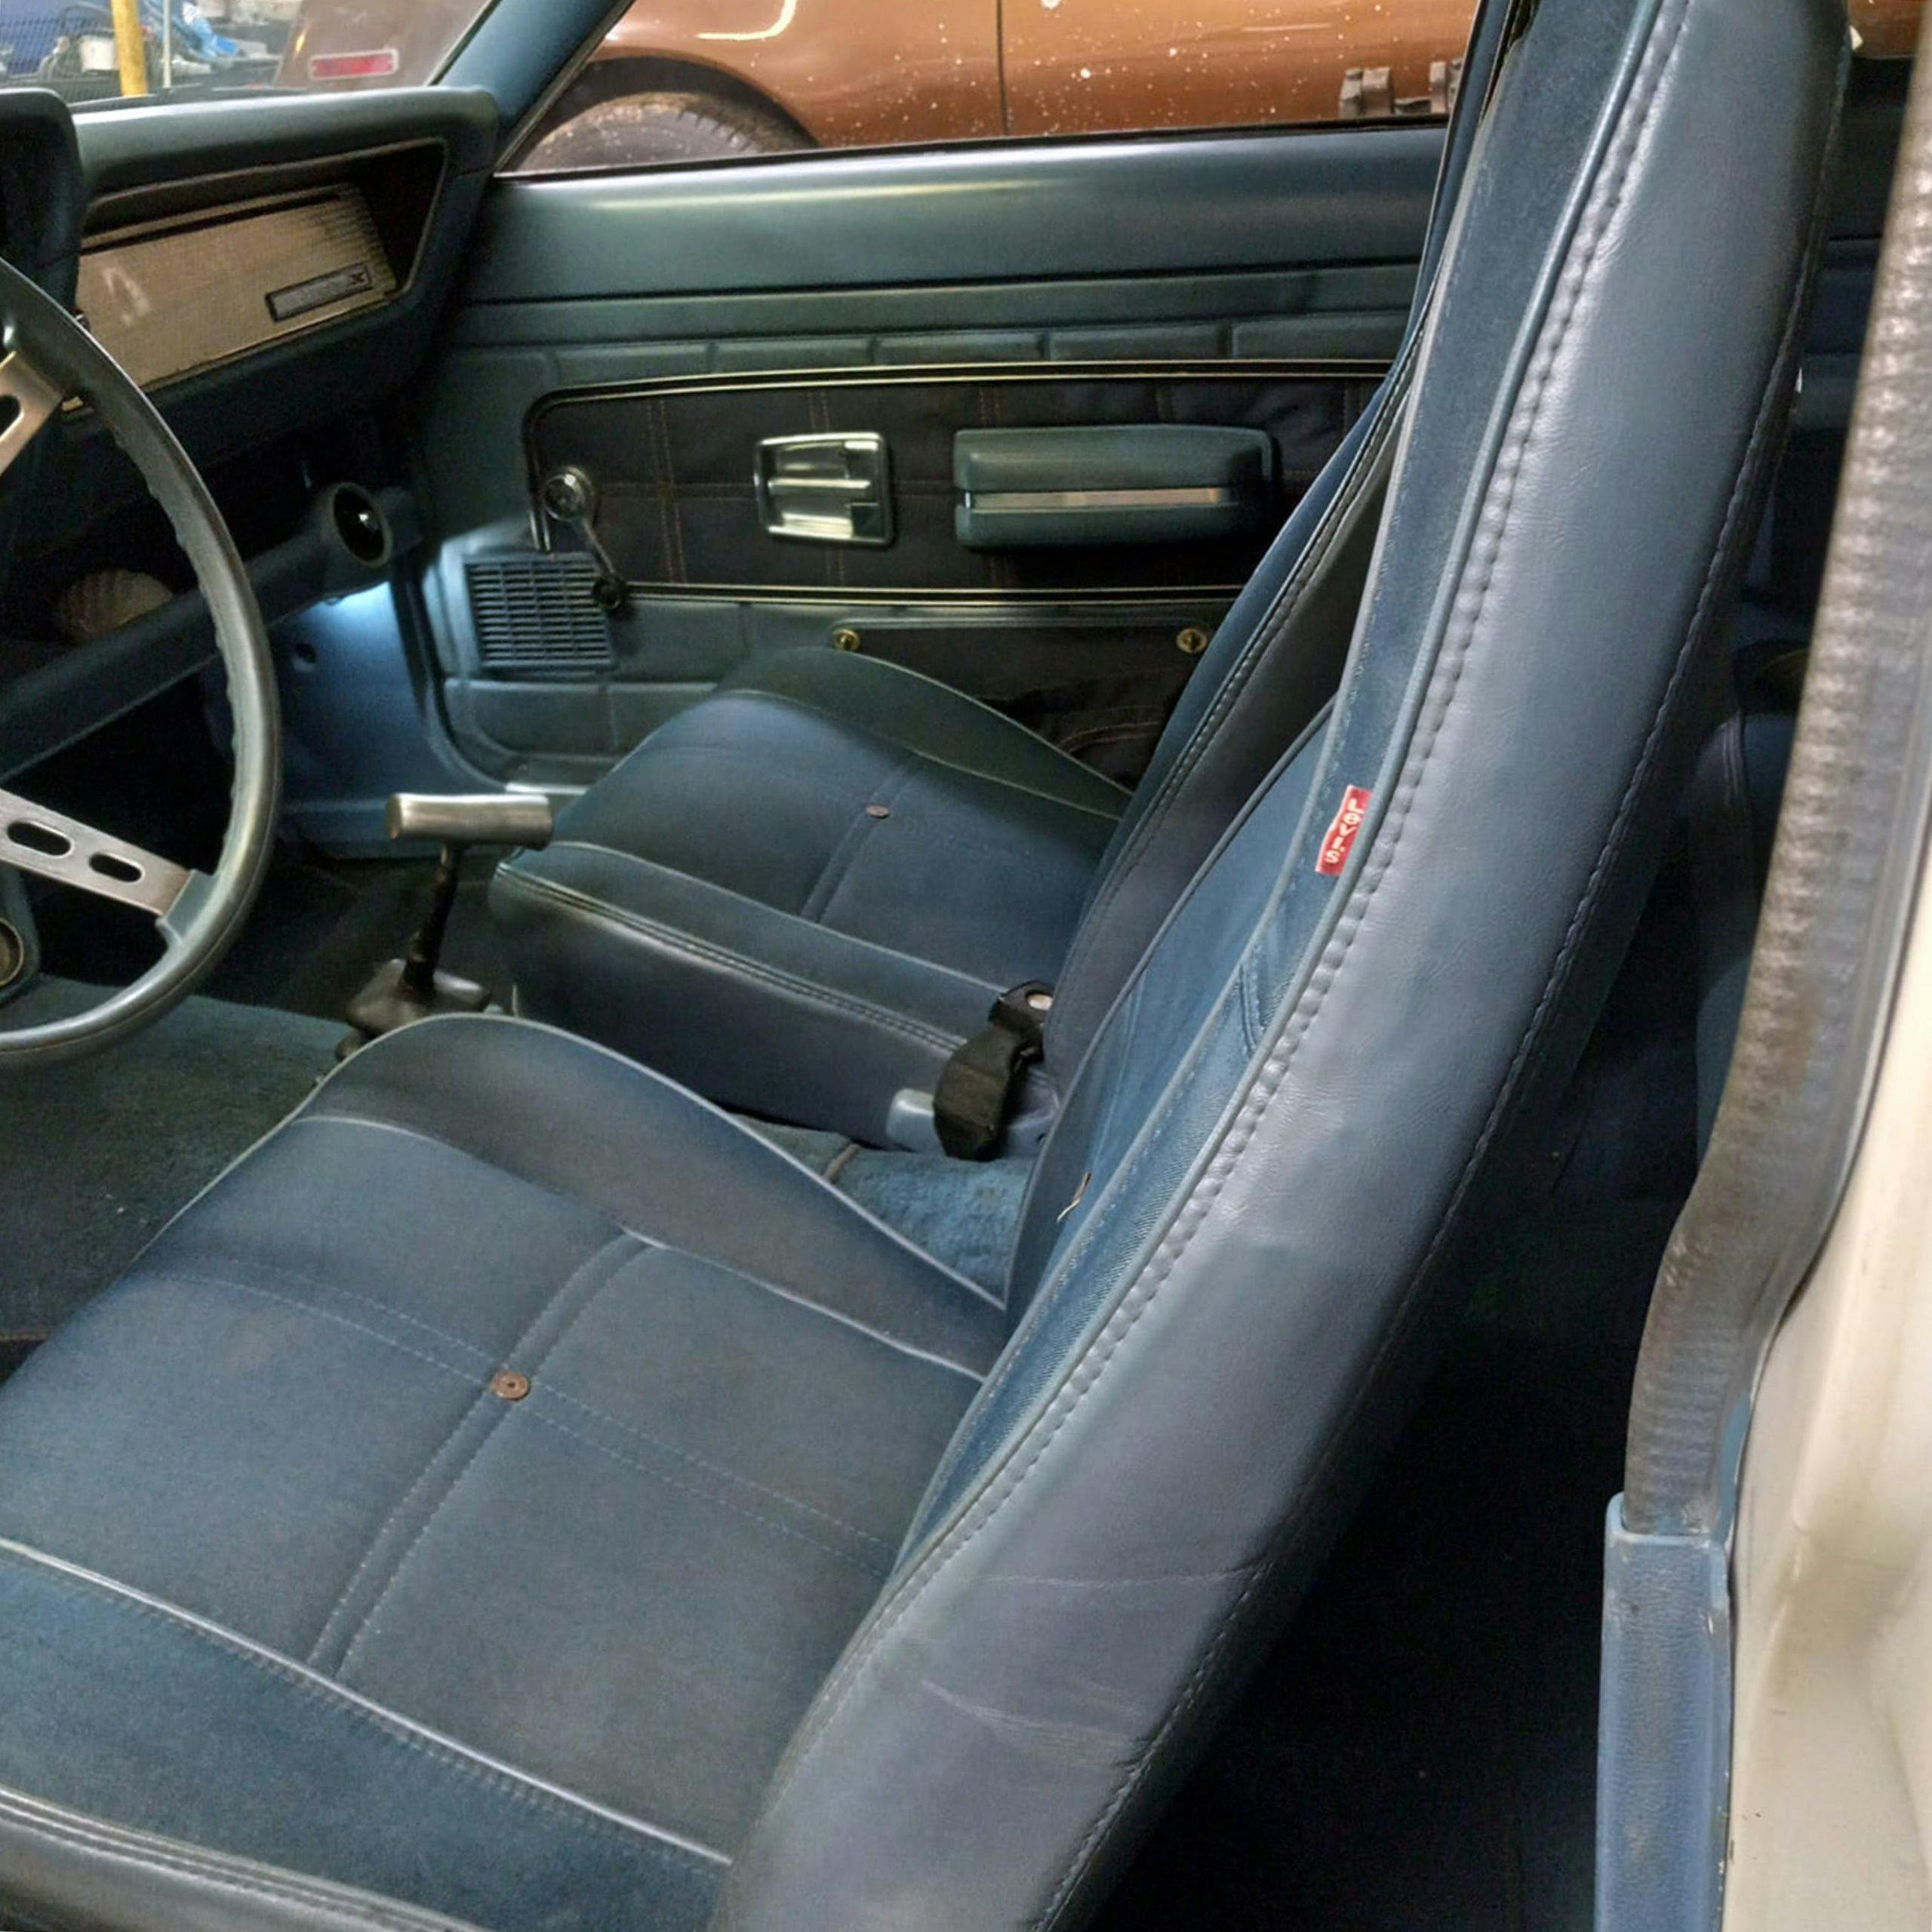 AMC Levis Gremlin interior denim seatback side